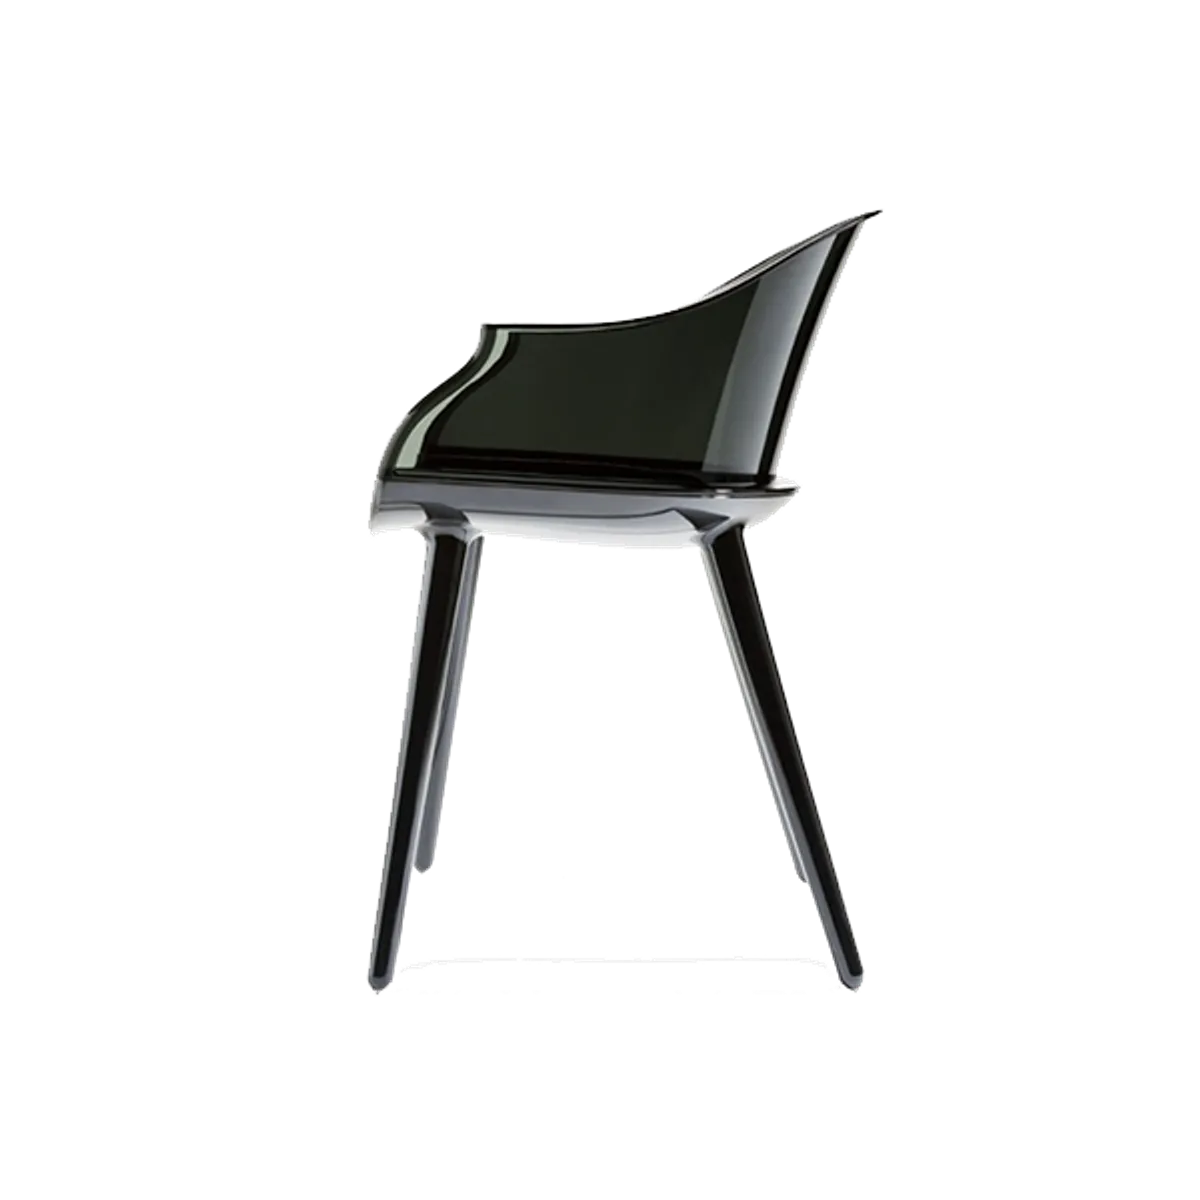 Web Cyborg Chair Sd1700 Transblack 01